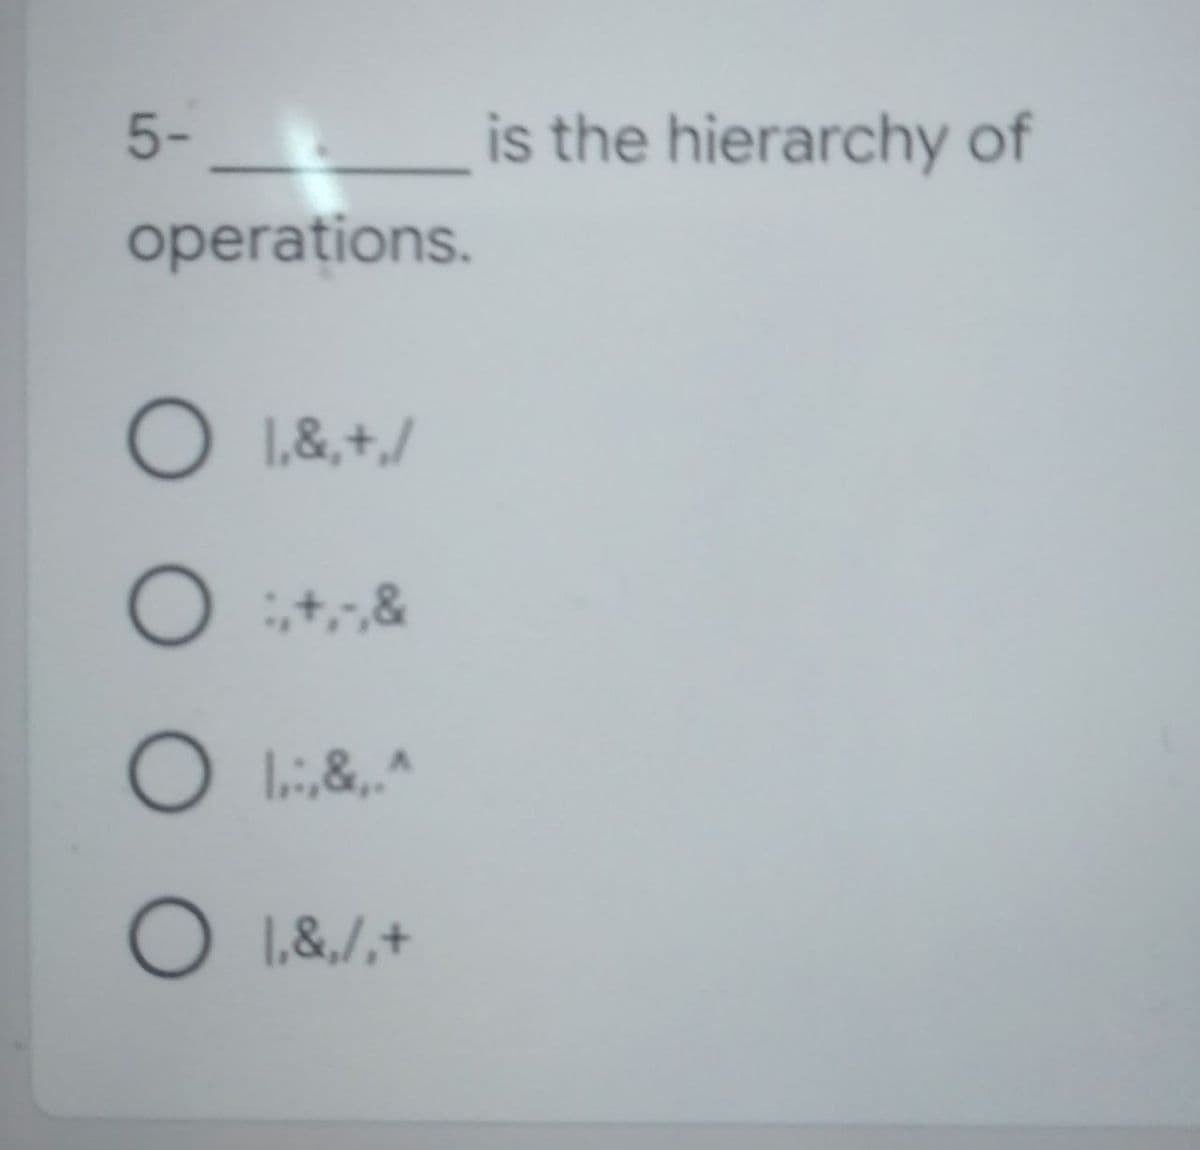 5- is the hierarchy of
operations.
O 1,&, +/
O :, +,-, &
O I., &,.^
O 1.&,/.+